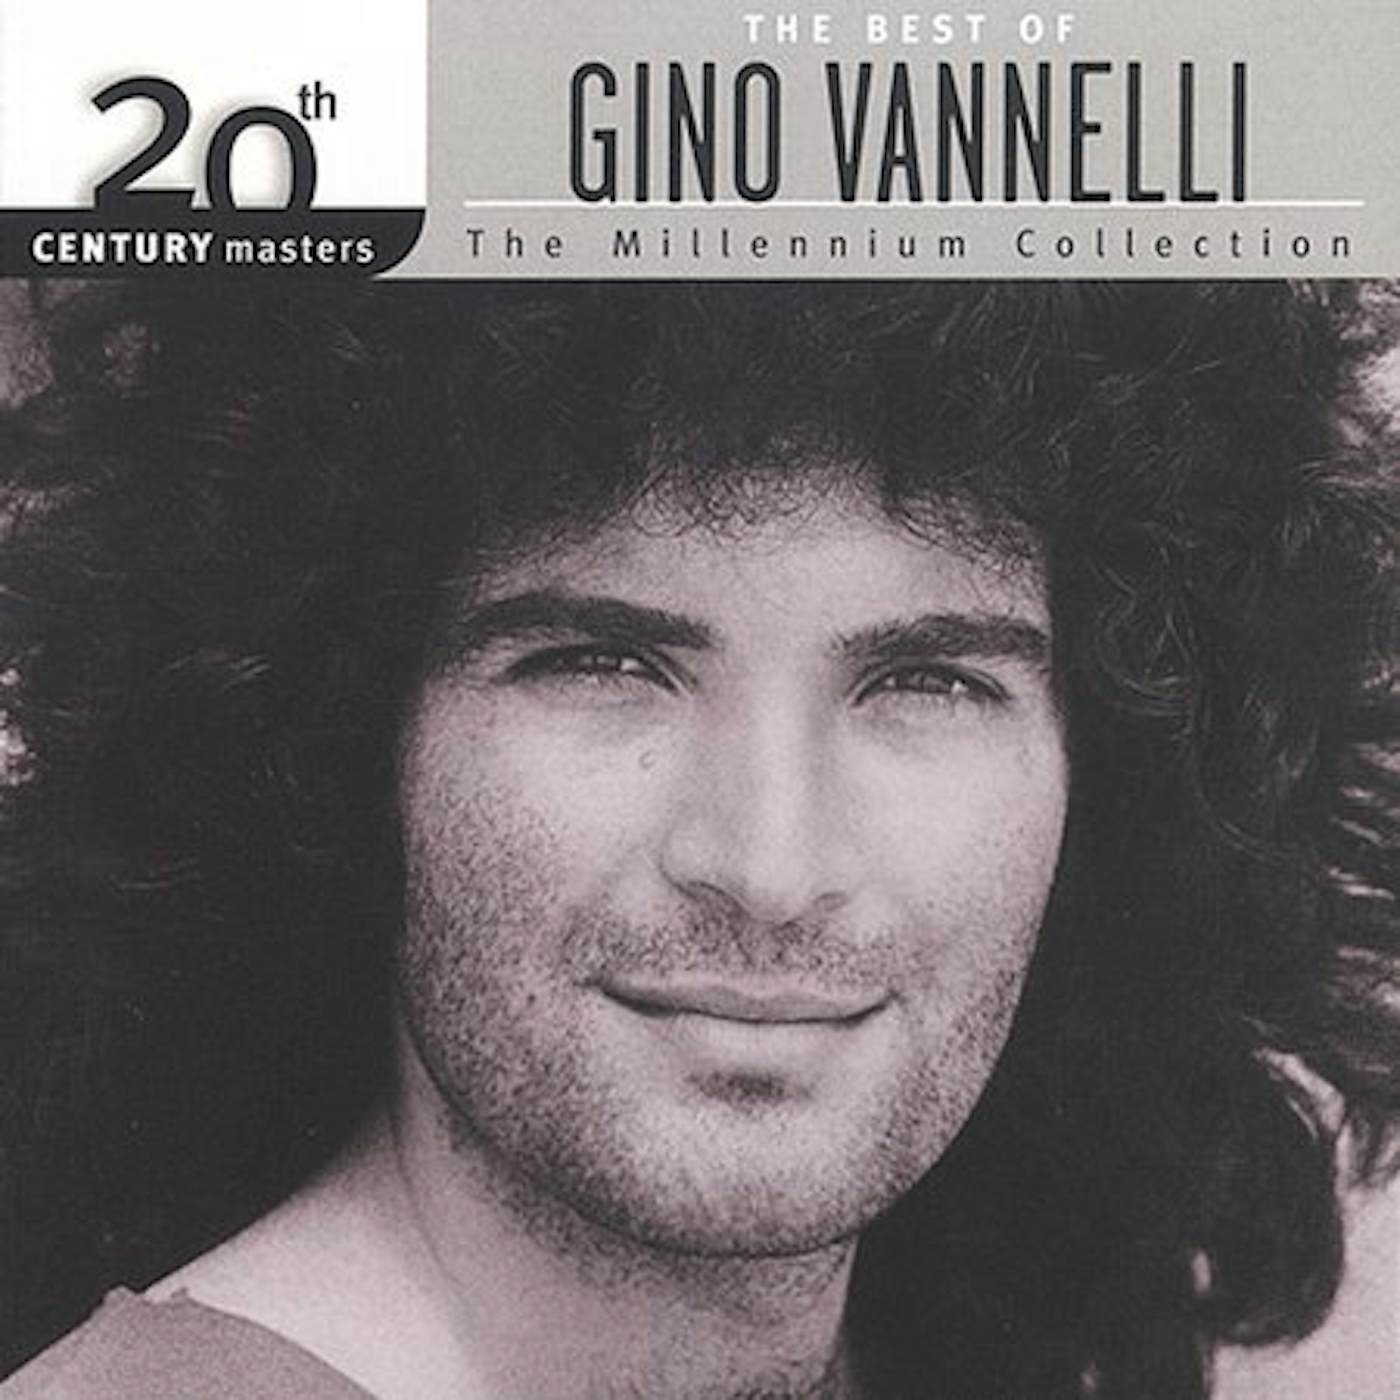 Gino Vannelli 20TH CENTURY MASTERS: MILLENNIUM COLLECTION CD